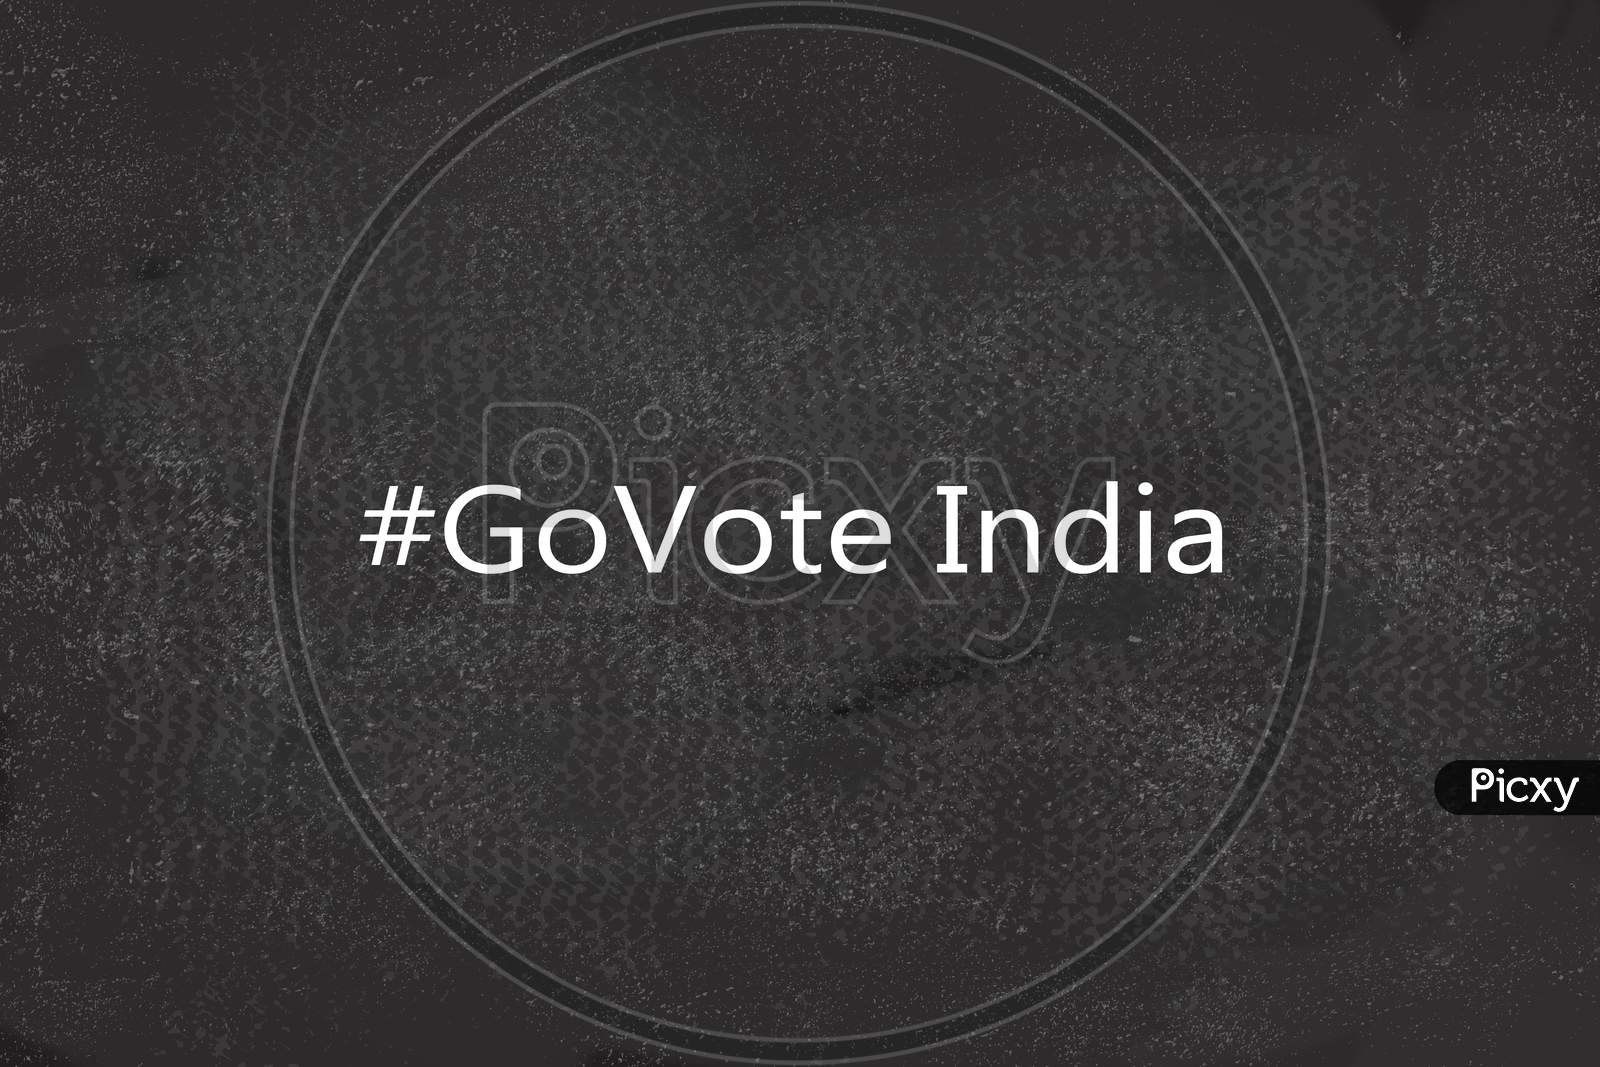 Govote Social Media Campaign Written On Blackboard